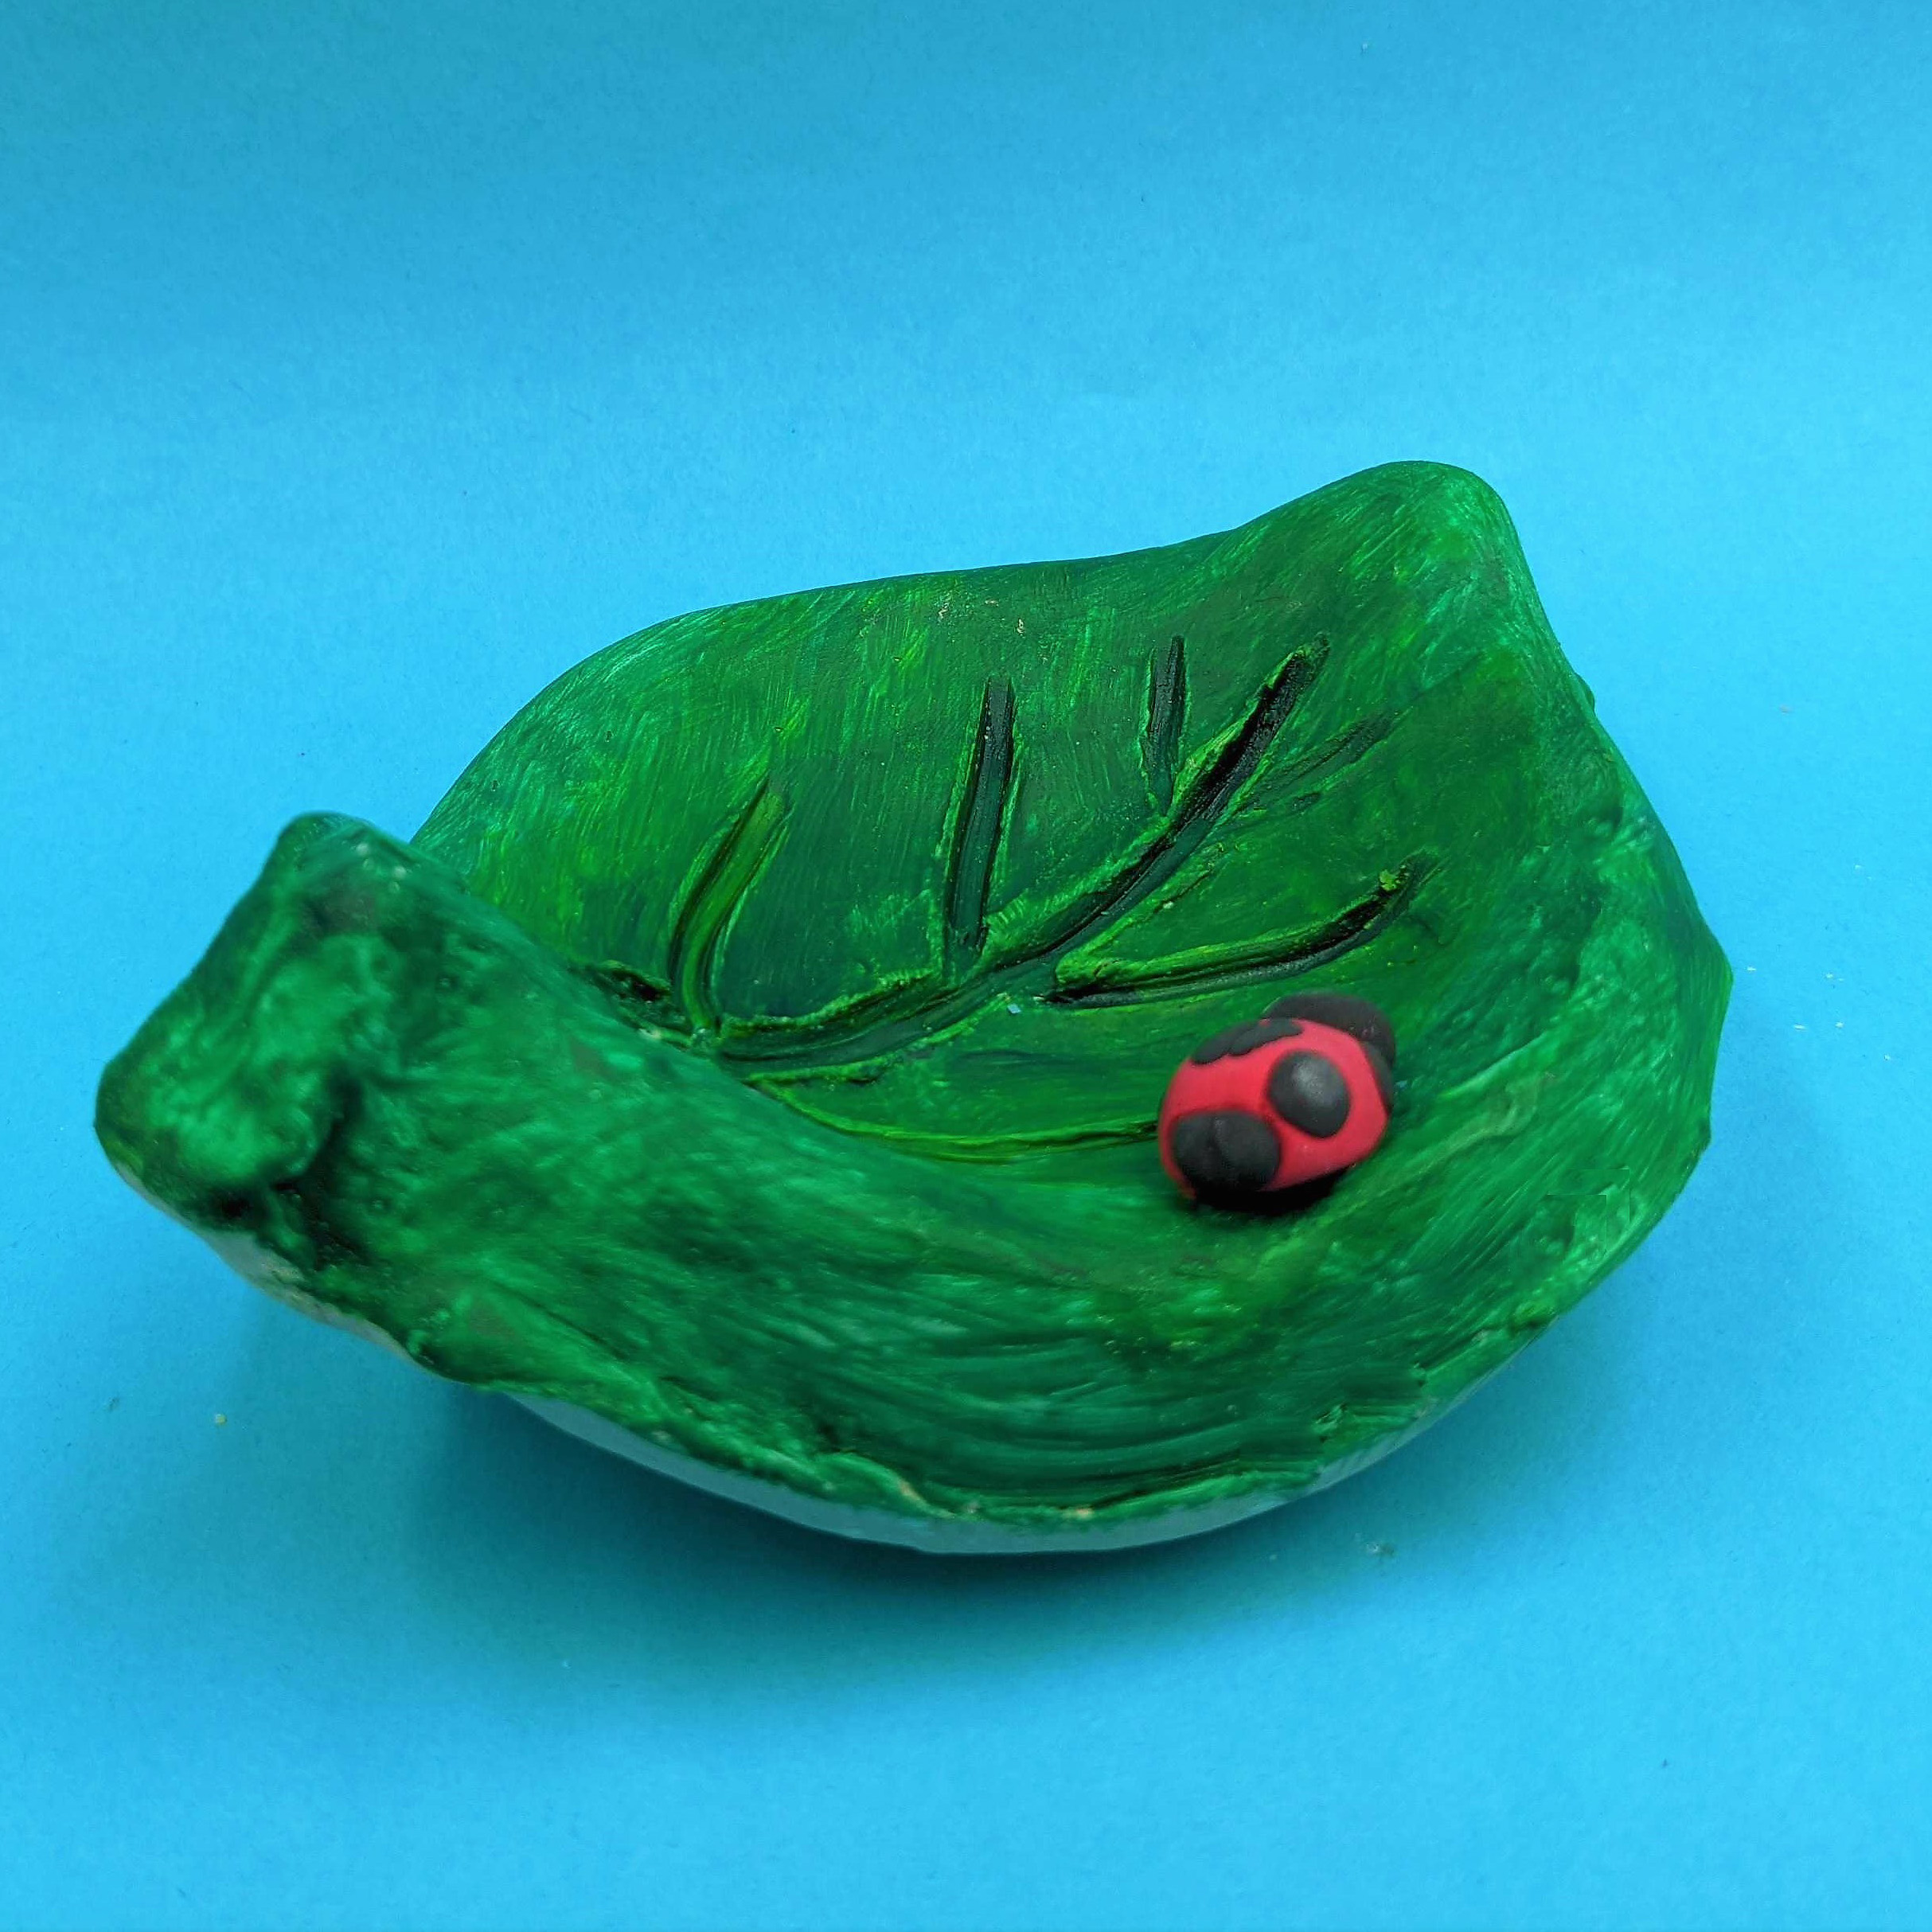 Kidcreate Mobile Studio - North Miami, Leaf bowl Art Project